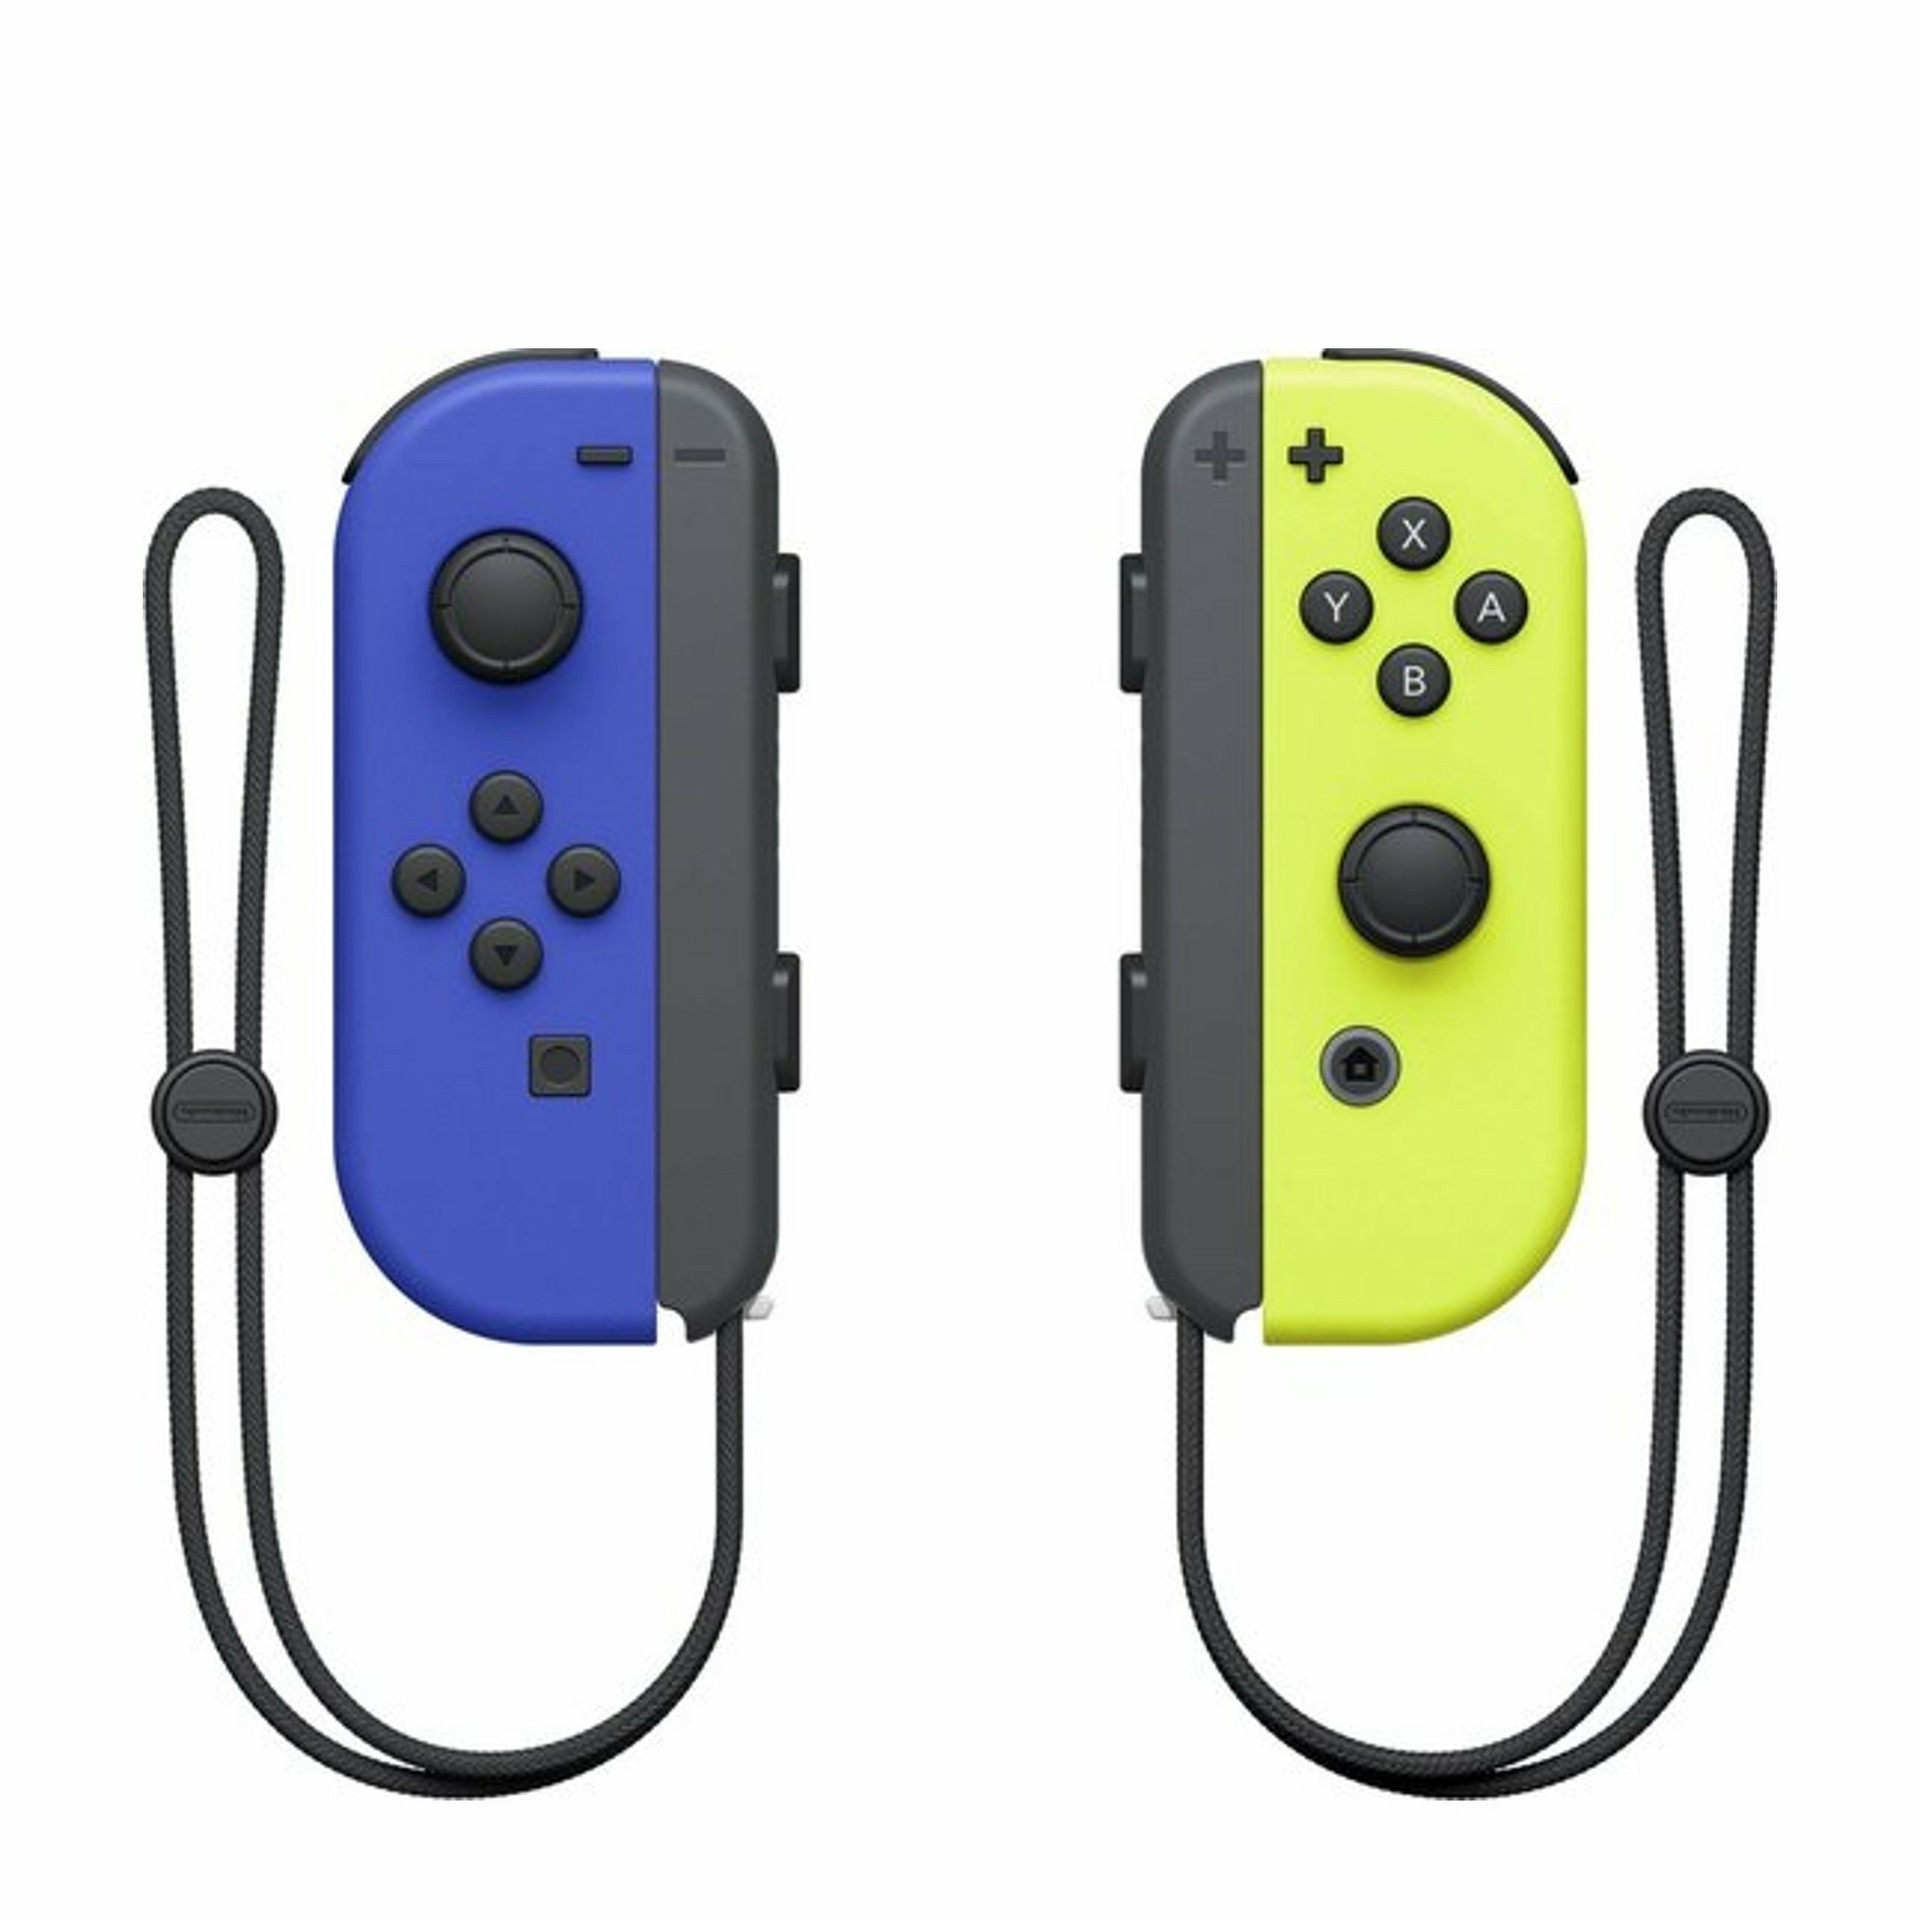 Nintendo Switch Joy-Con Controllers - Blauw/Geel [Complete] - Nintendo Switch Hardware - 2